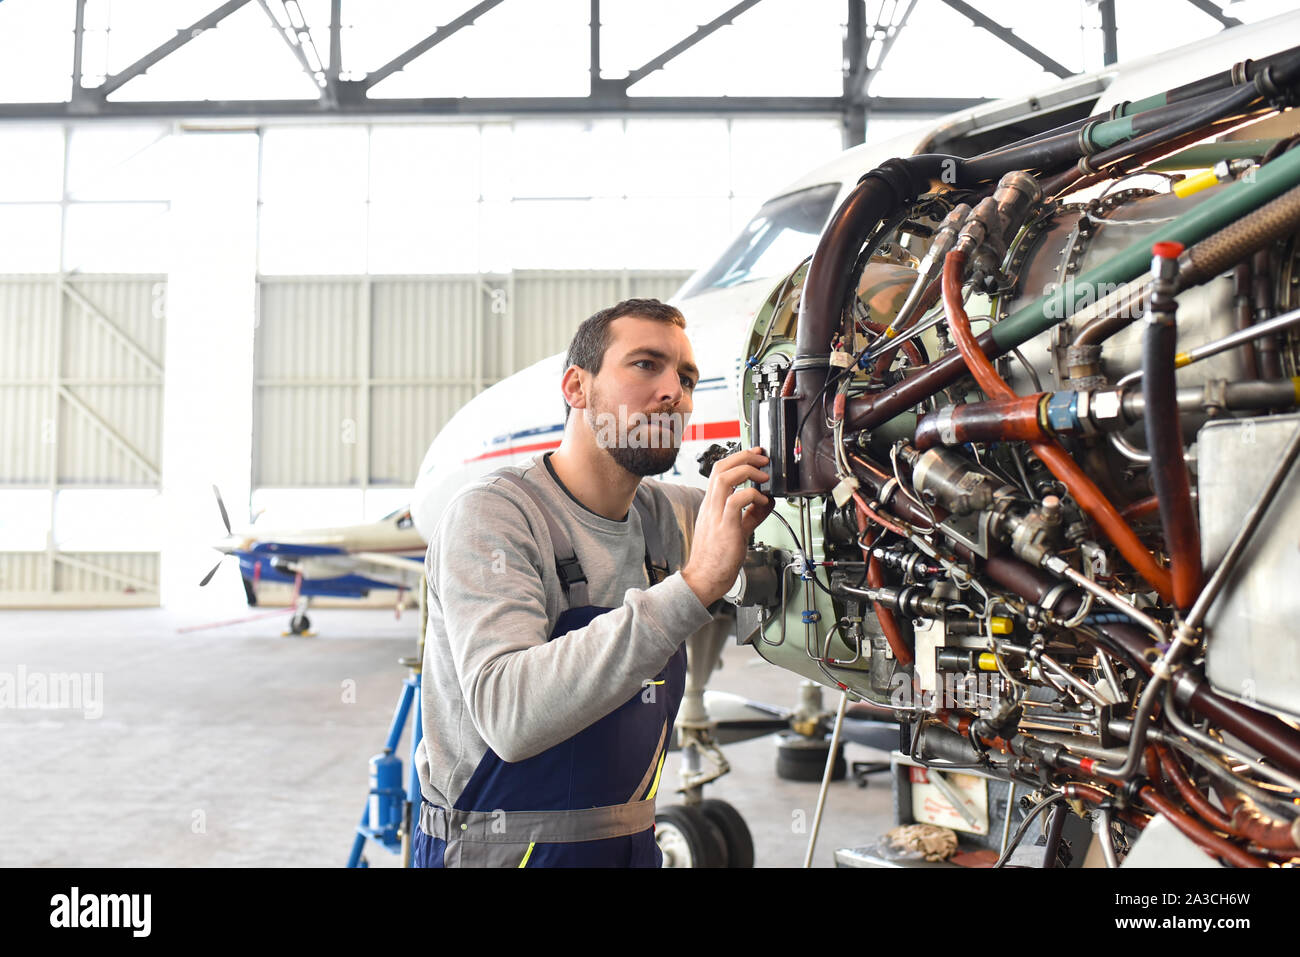 Aircraft mechanic repairs an aircraft engine in an airport hangar Stock Photo